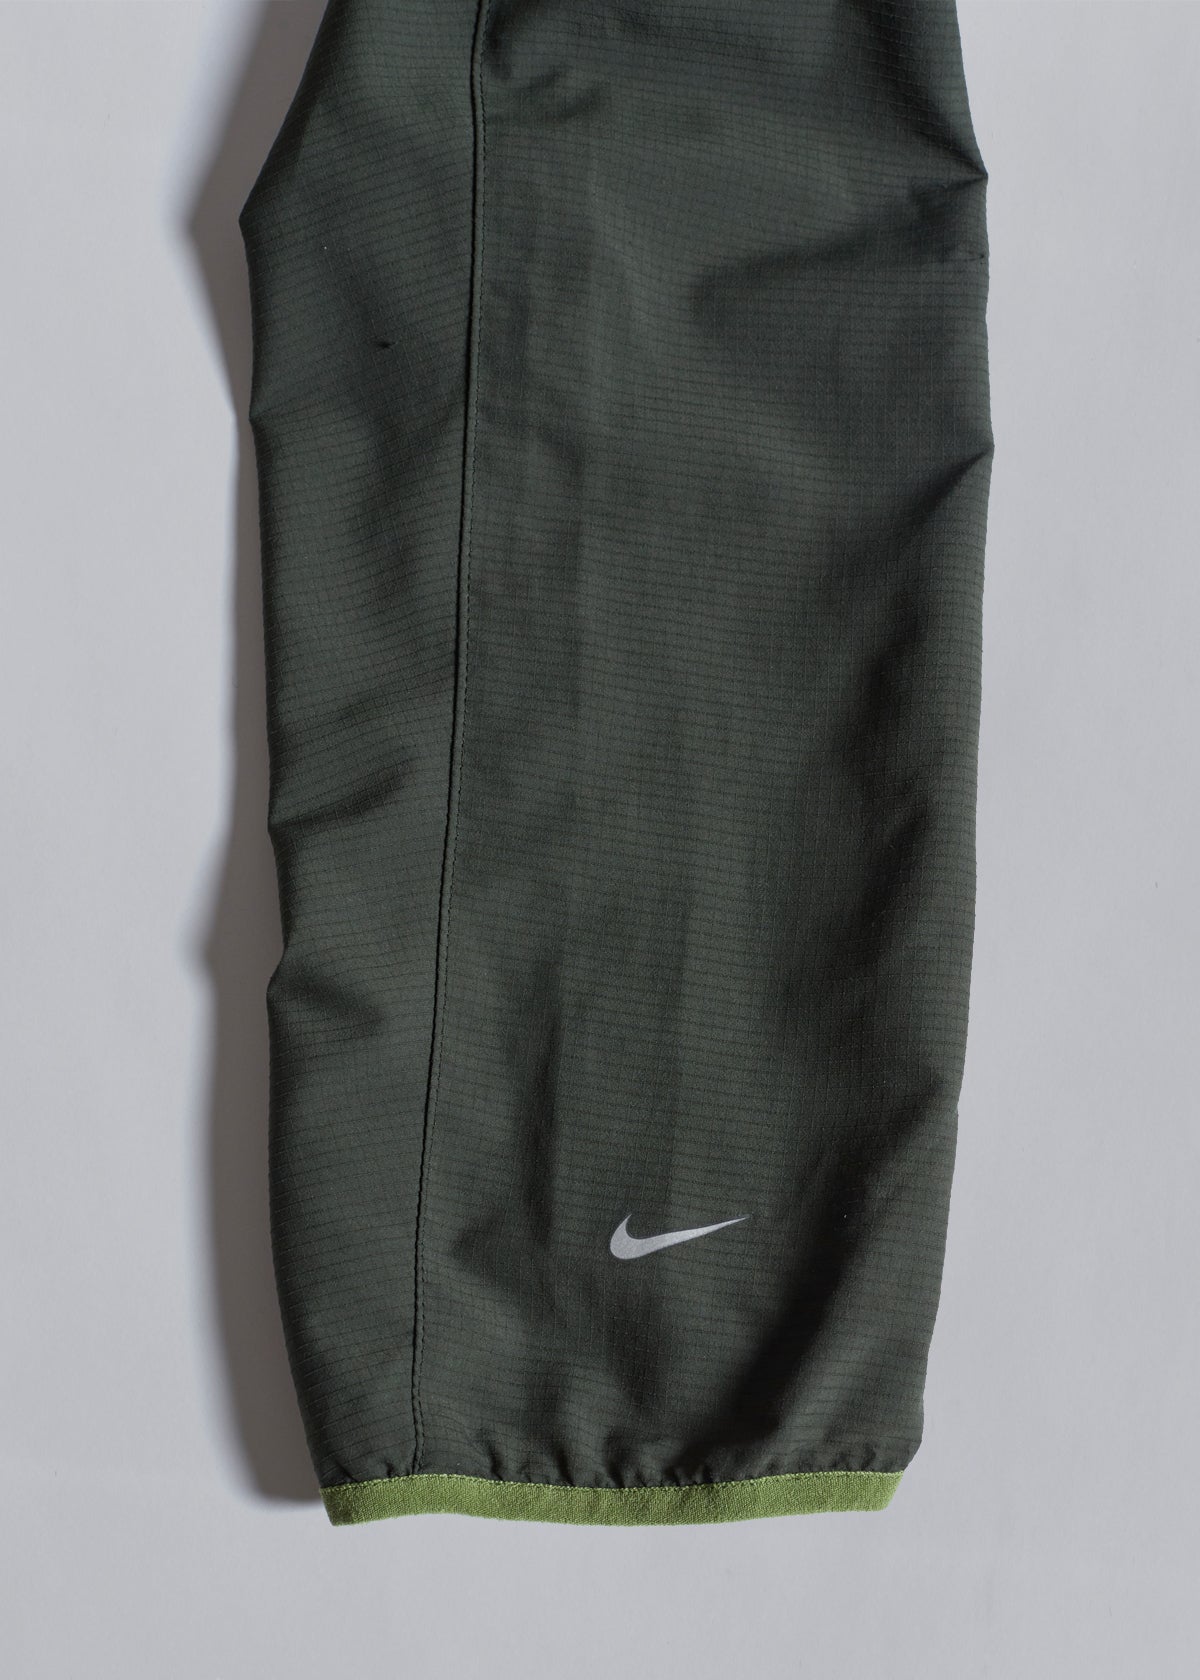 Nike/Undercover Gyakusou Lightweight Running Jacket AW2012 - Large - The Archivist Store